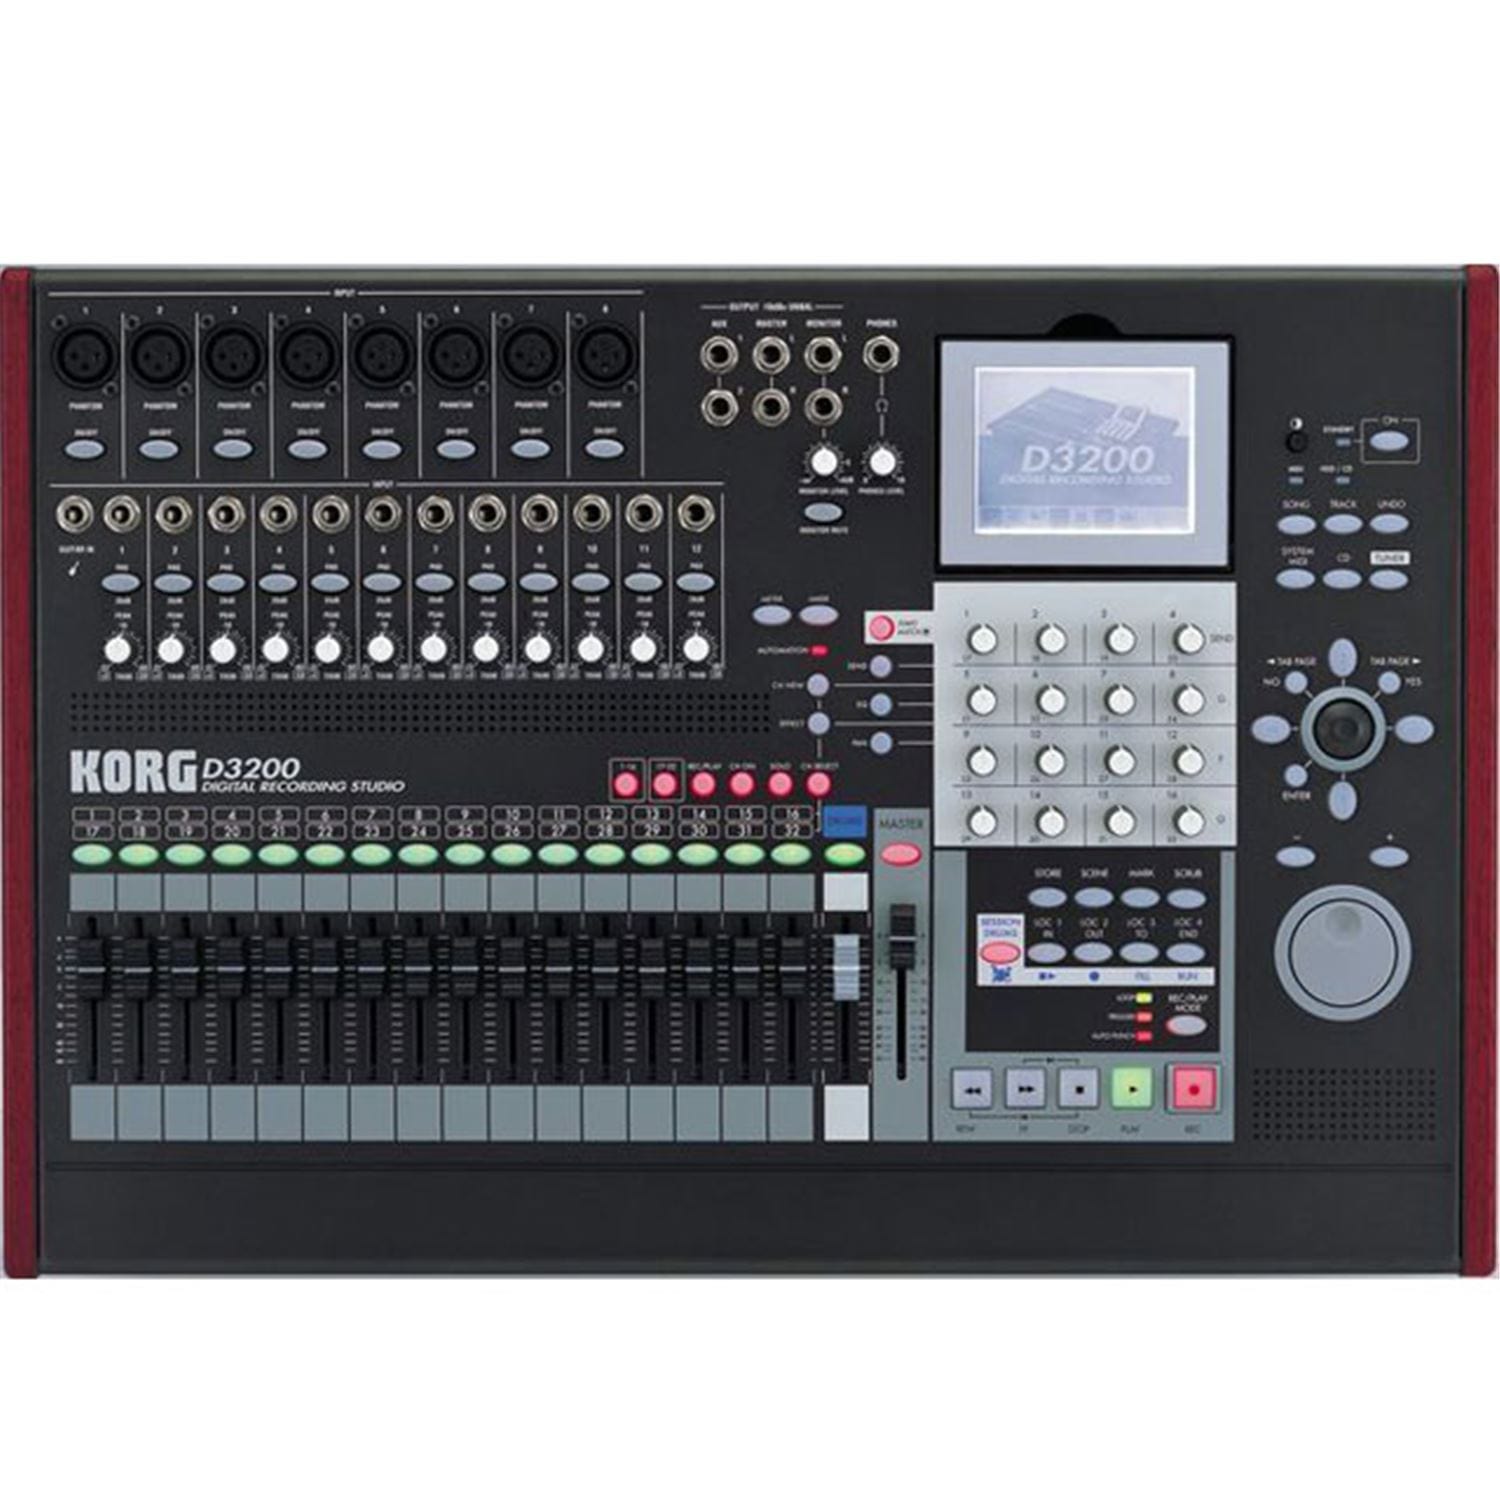 Korg D 3200 32 Track Digital Recording Studio